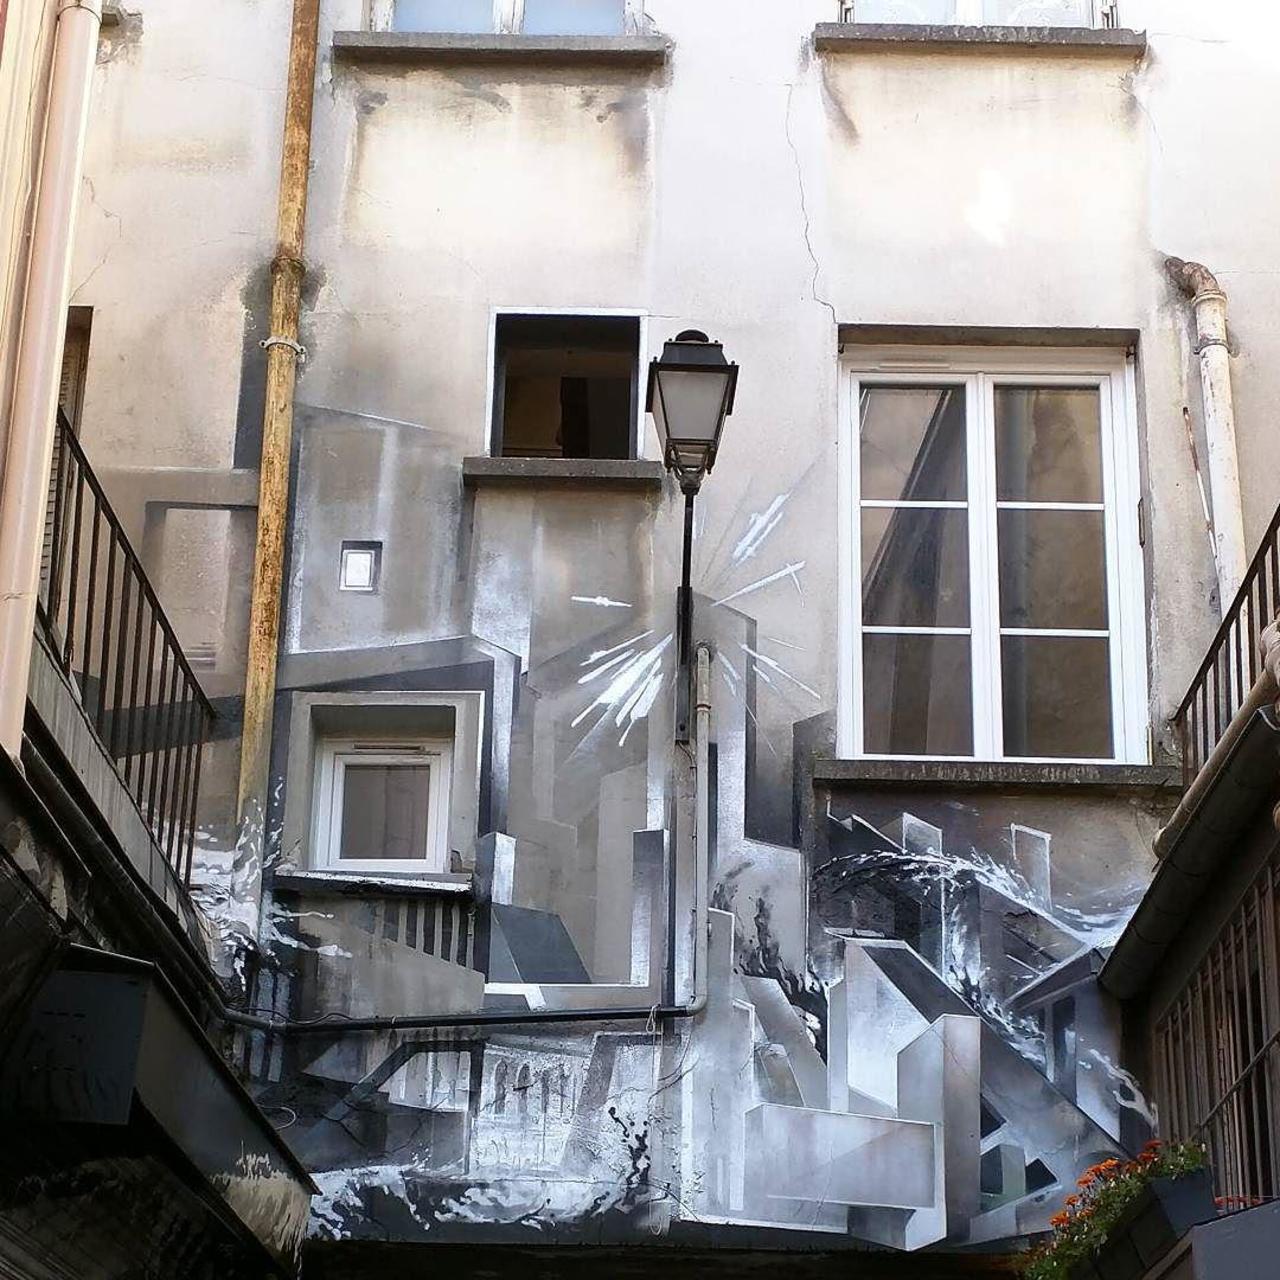 circumjacent_fr: #Paris #graffiti photo by alphaquadra http://ift.tt/1PHUWZi #StreetArt http://t.co/7yModudLZ8